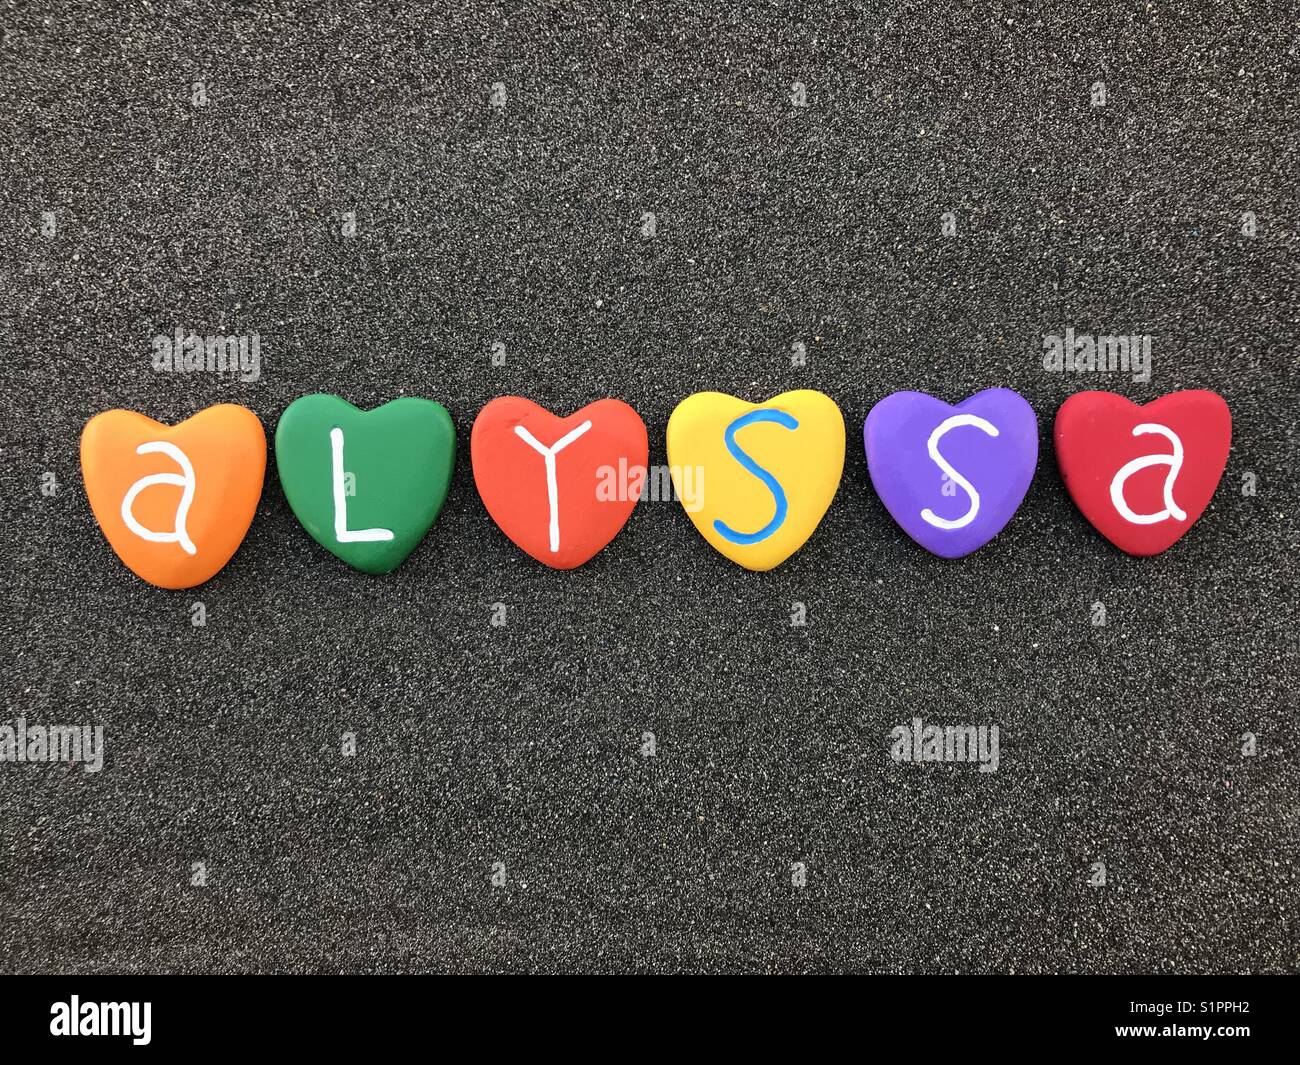 Alyssa, feminine name with colored heart stones over black volcanic sand Stock Photo